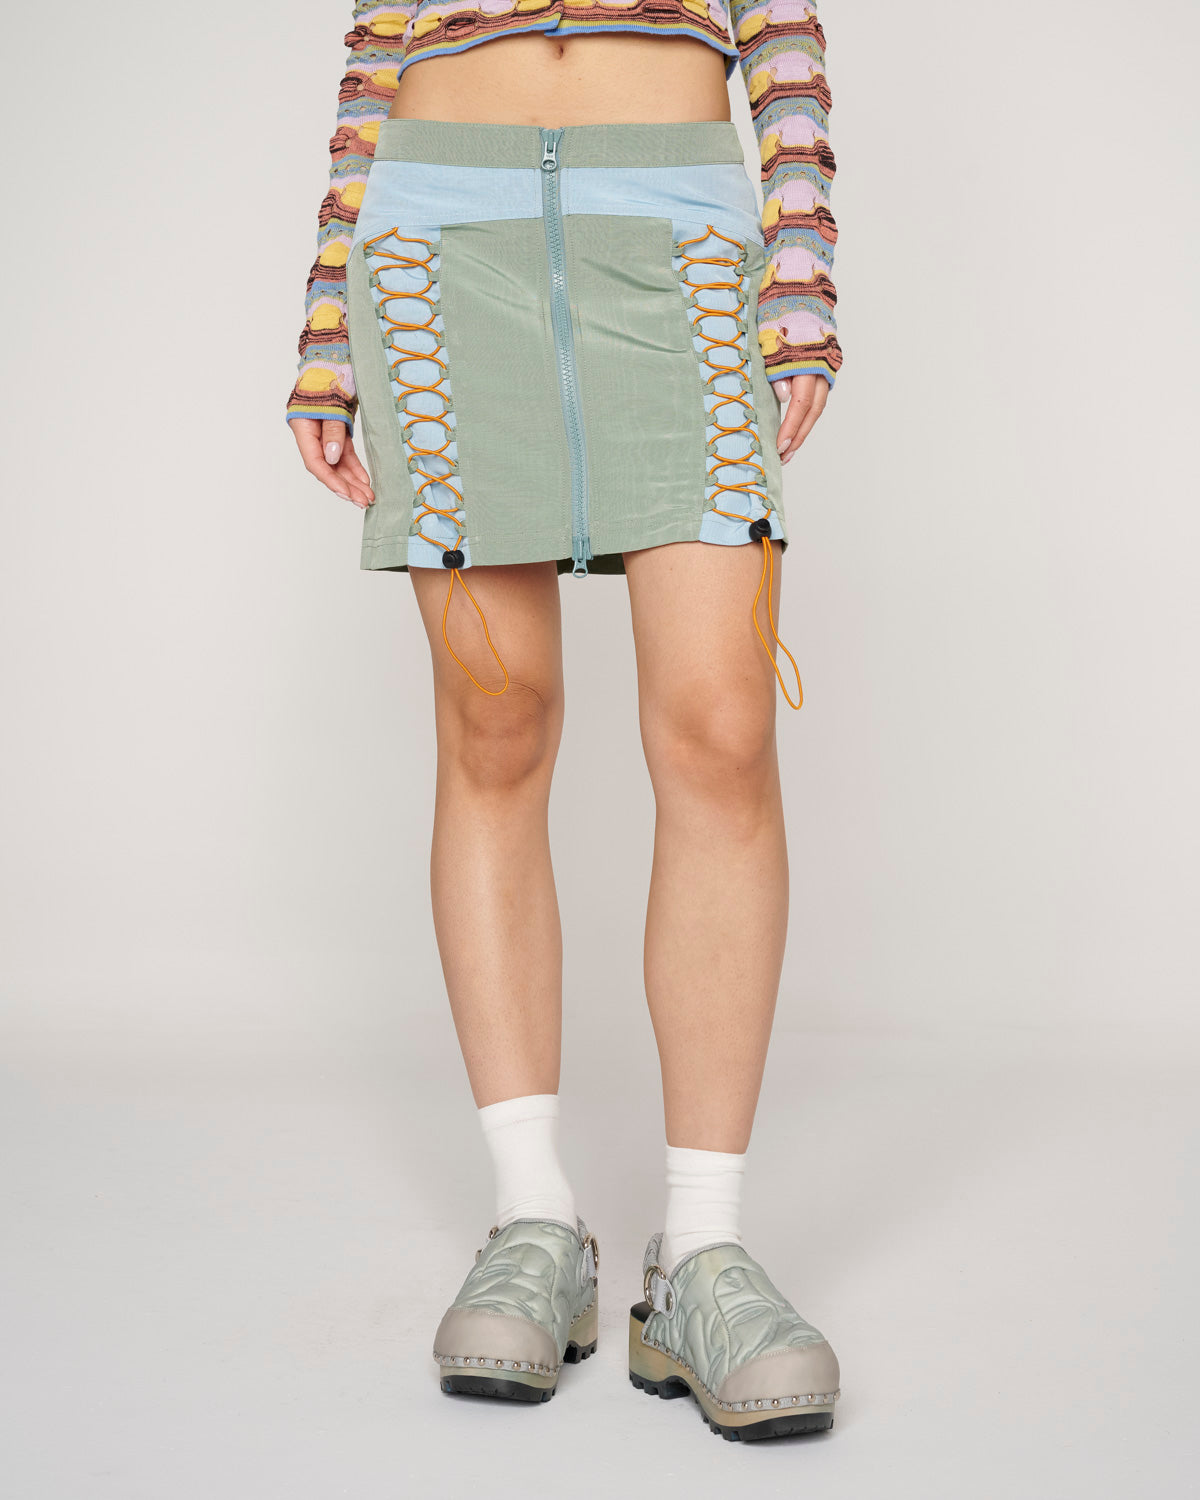 Bungee Zip Mini Skirt - Seafoam 4